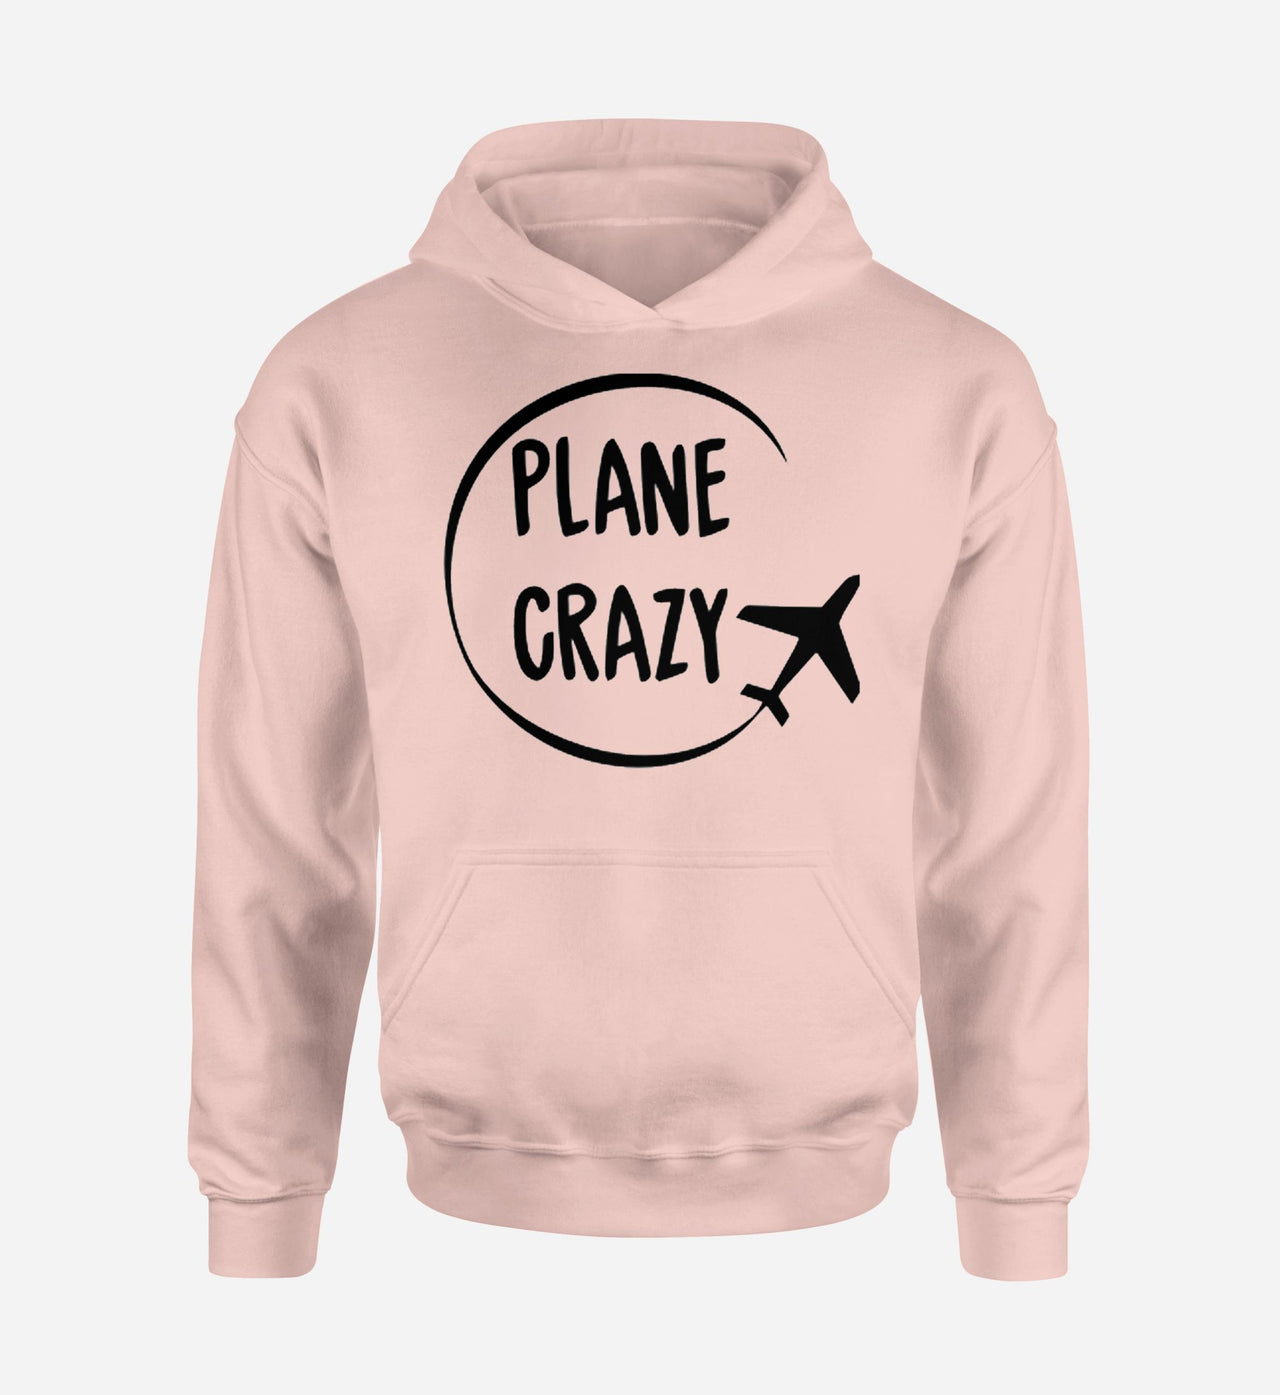 Plane Crazy Designed Hoodies